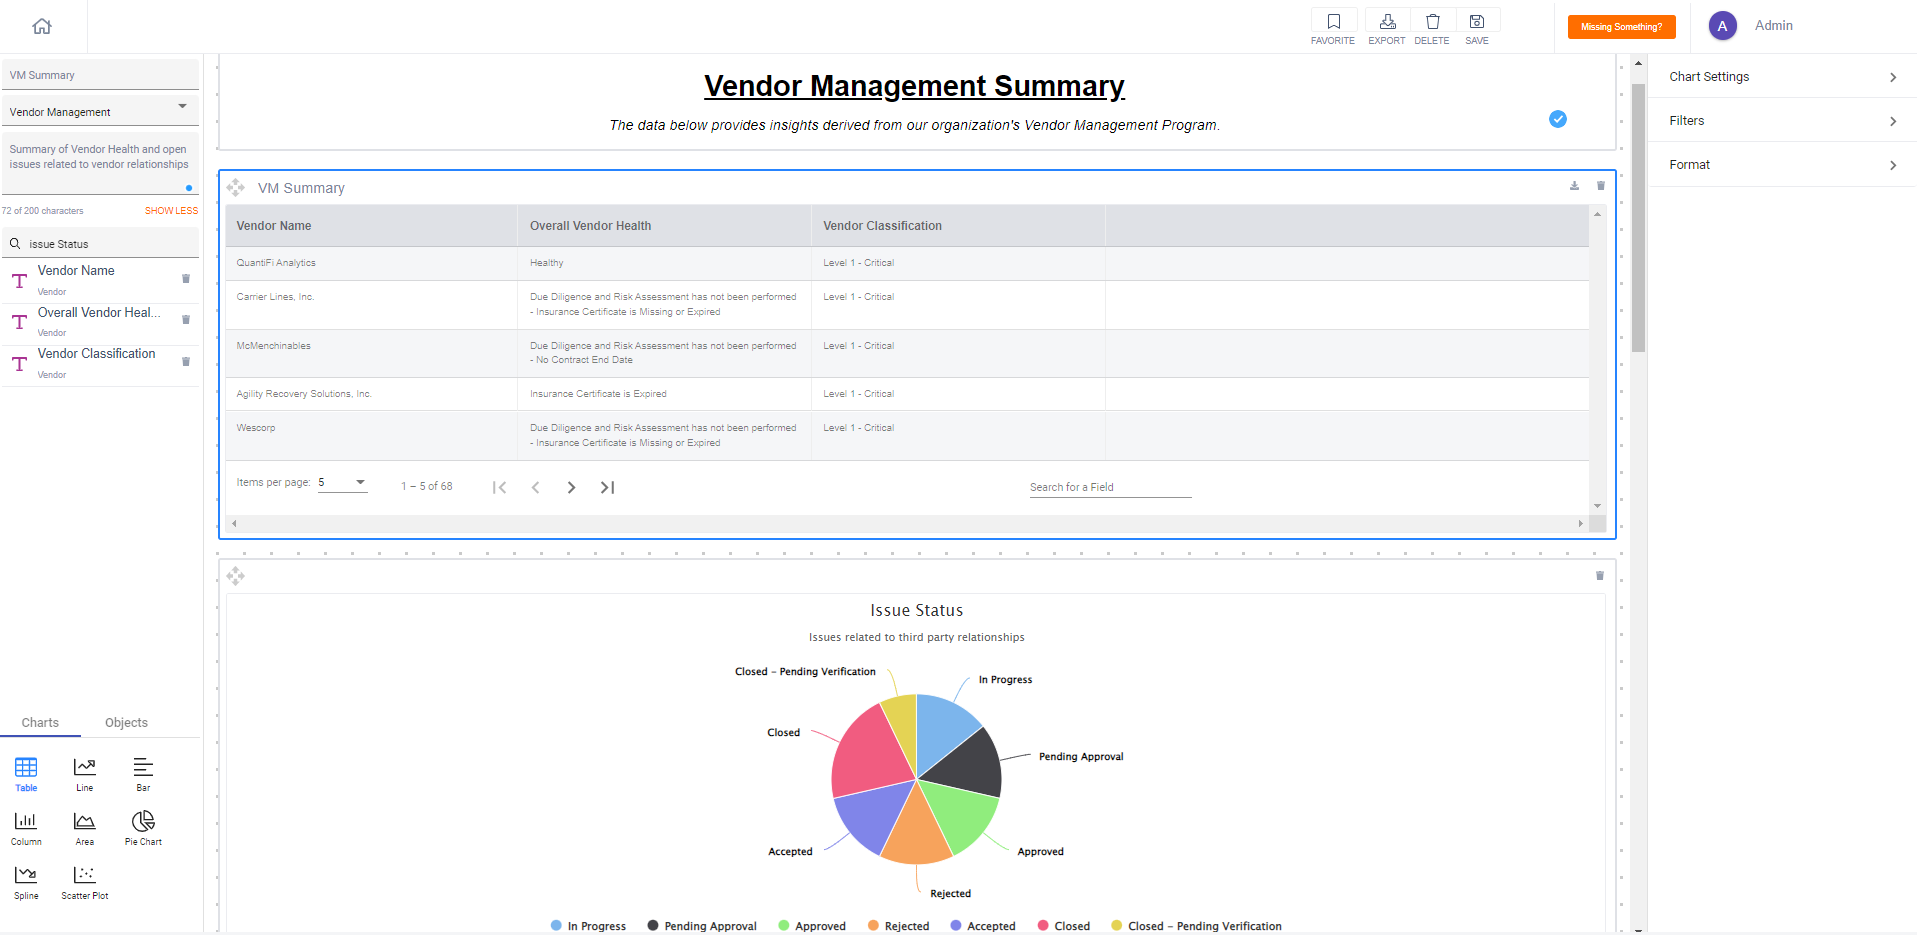 Quantivate Complaint Management screenshot & Video